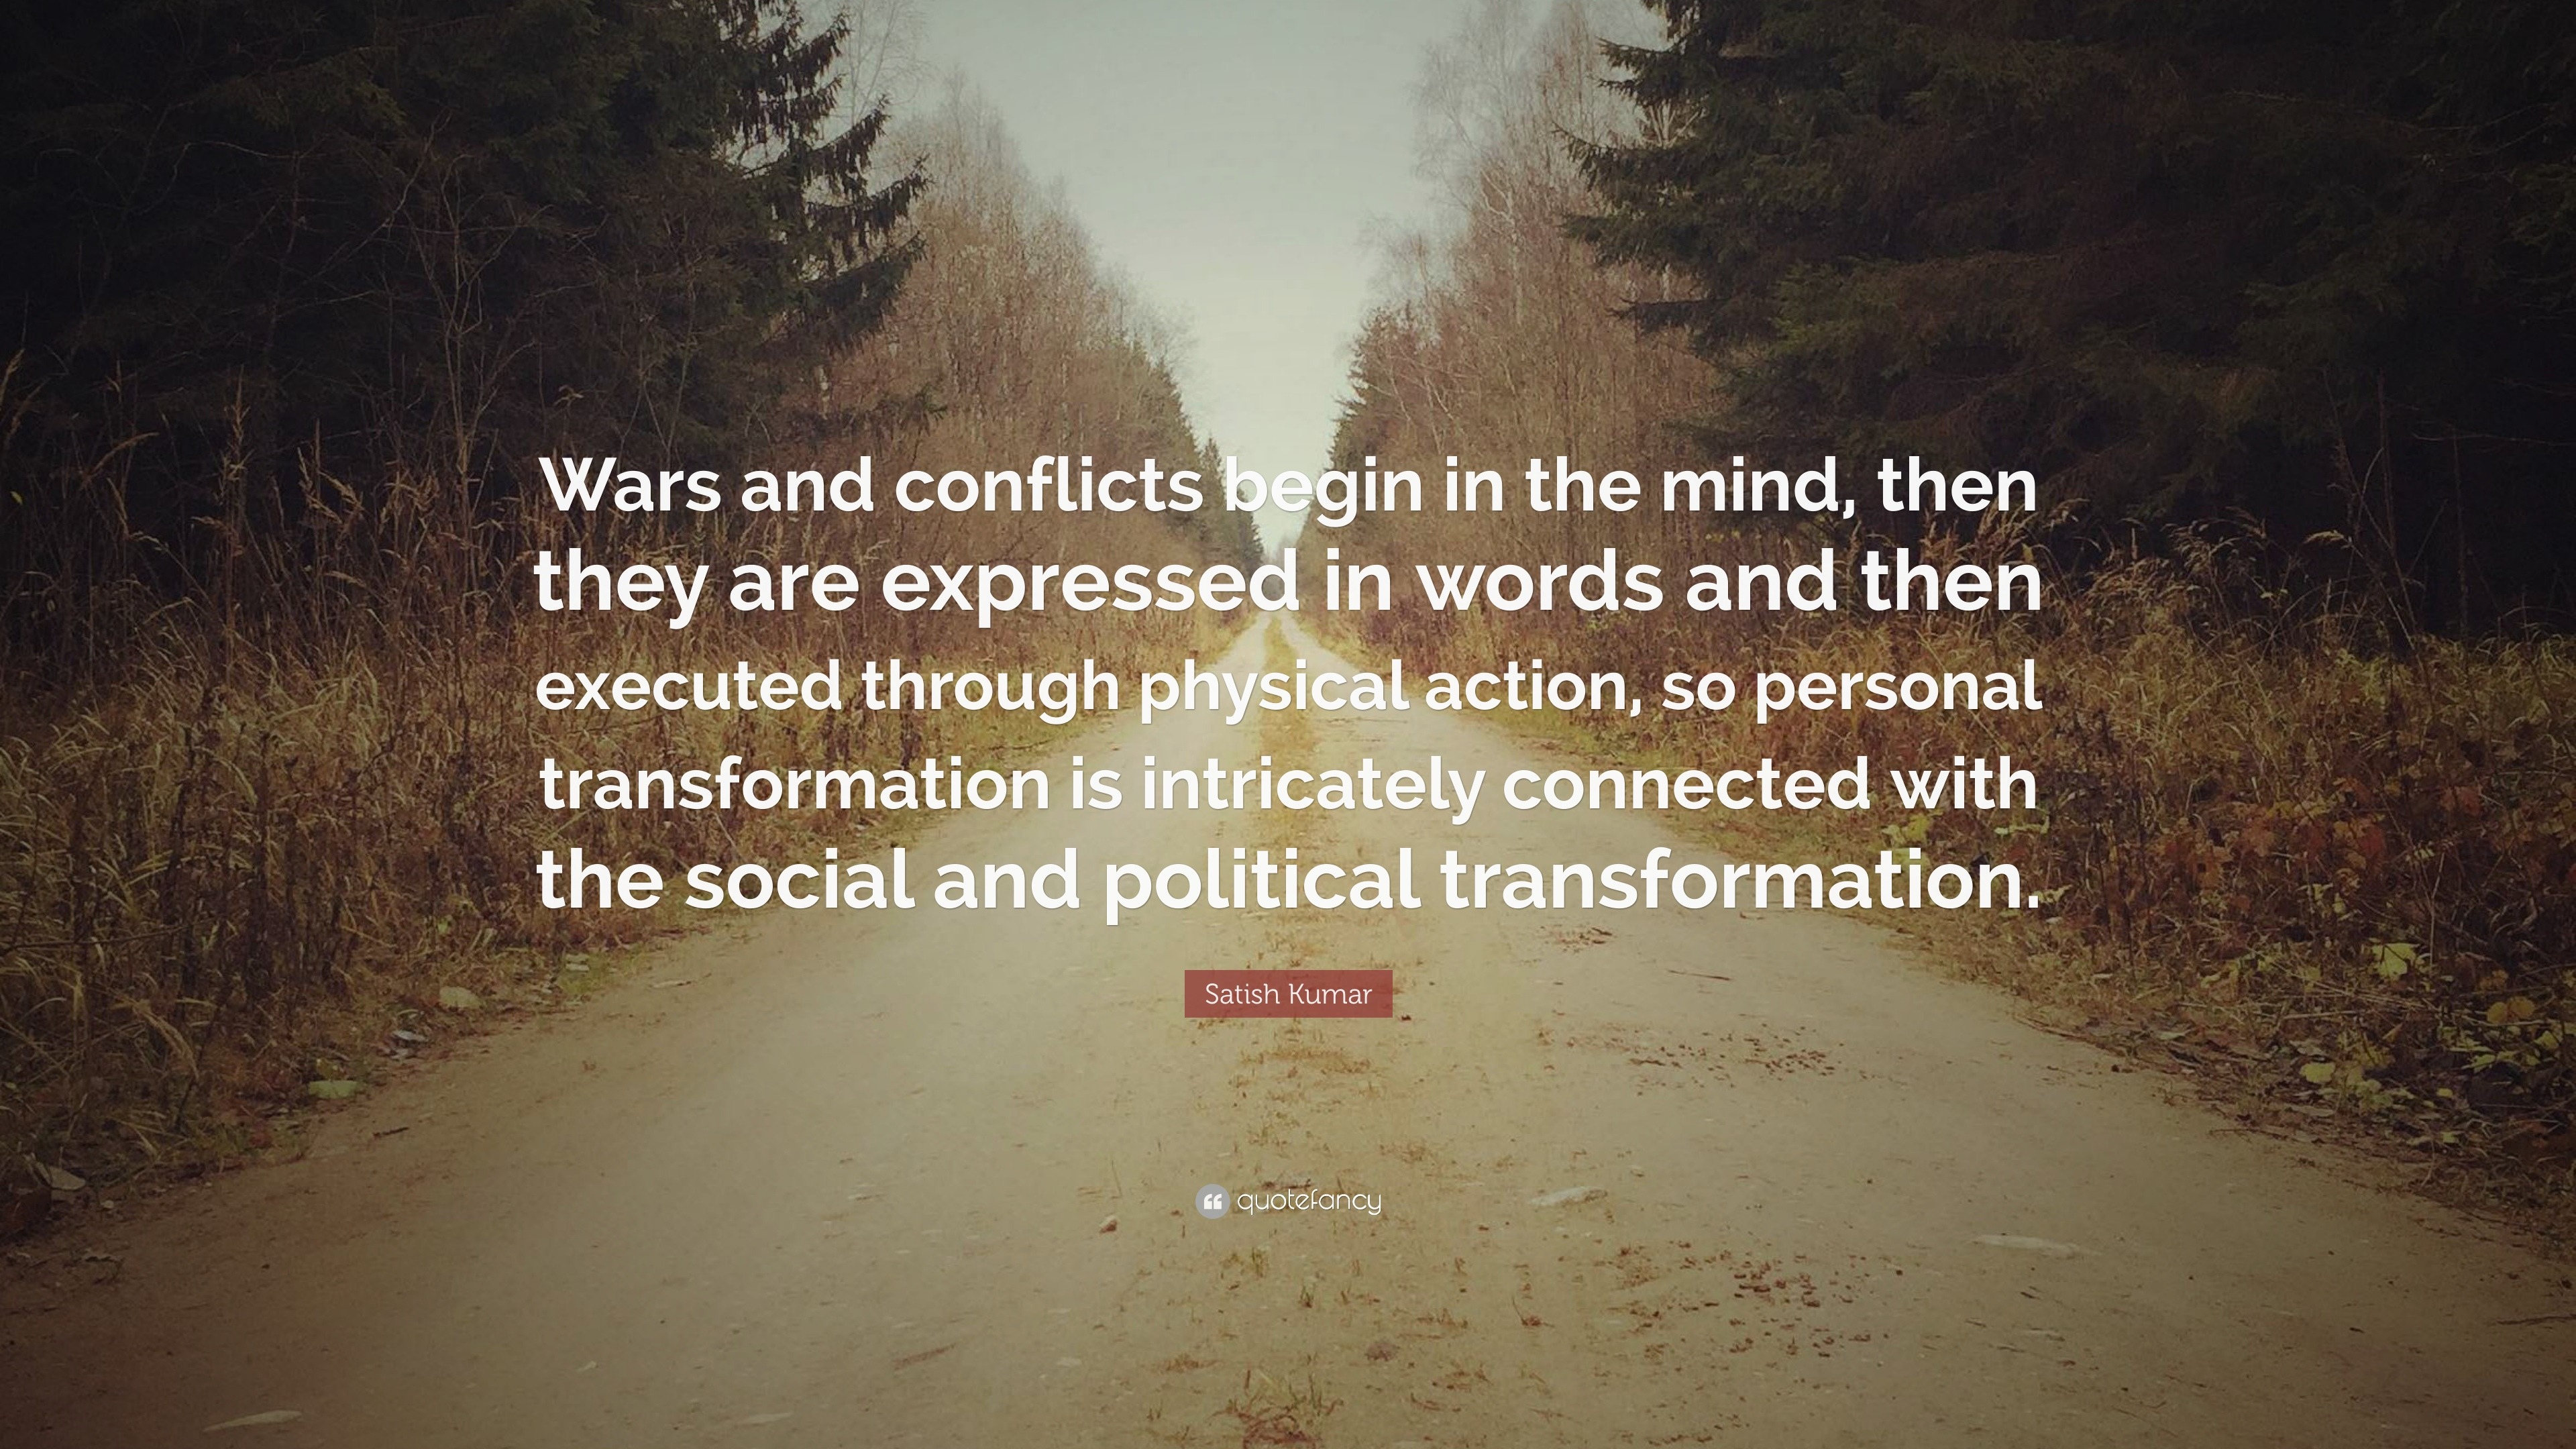 conflict drives progress quote